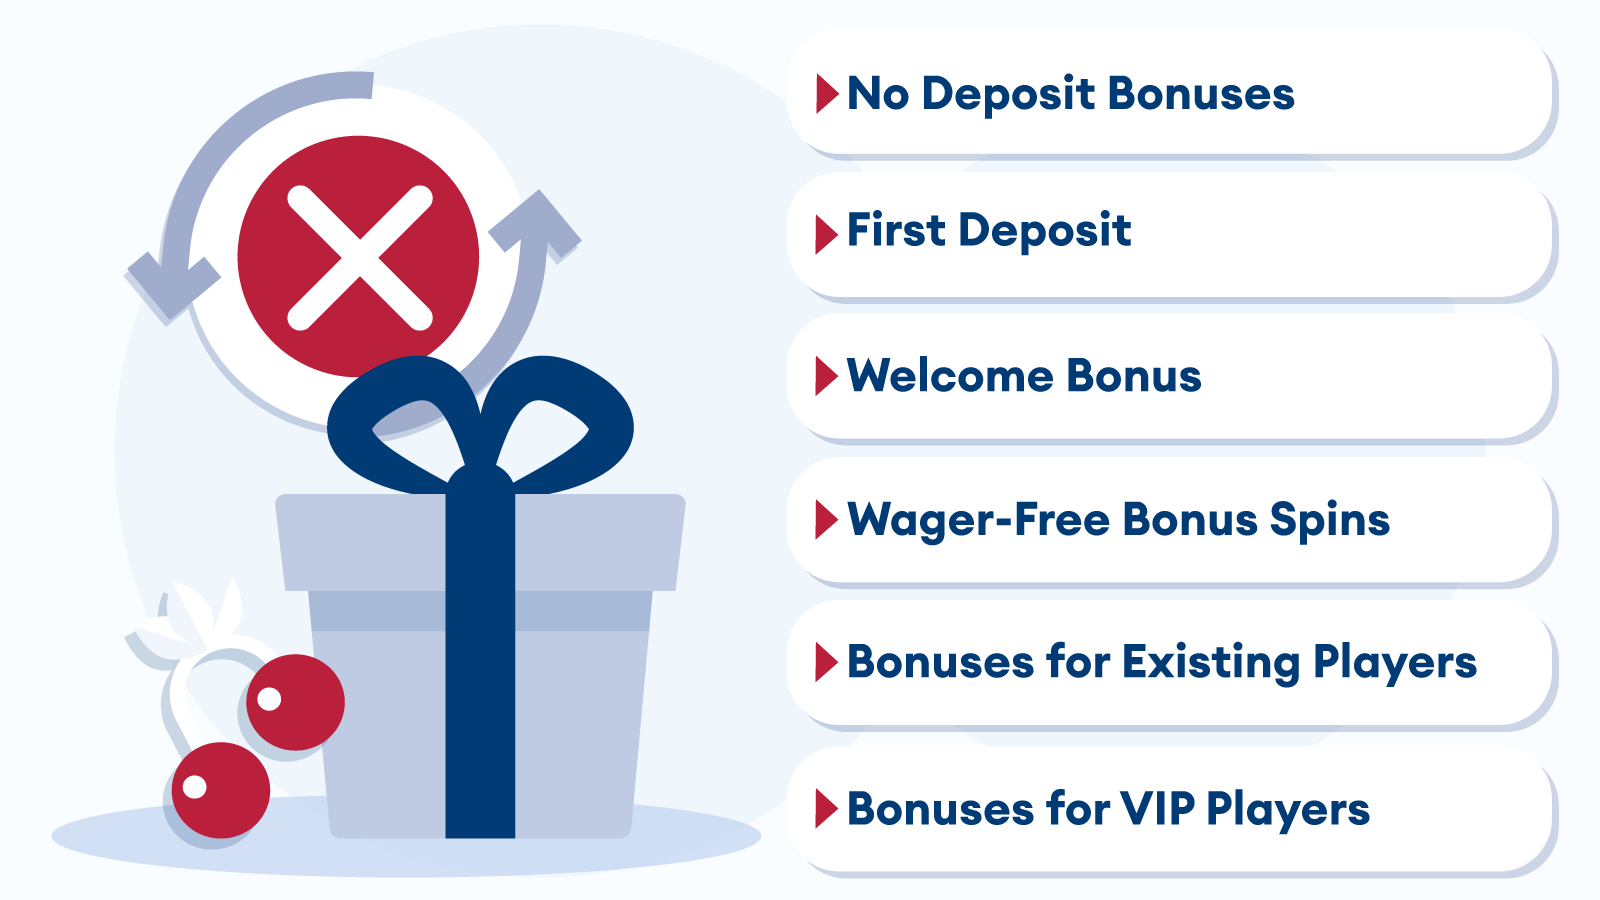 Types of No Wagering Casino Bonuses